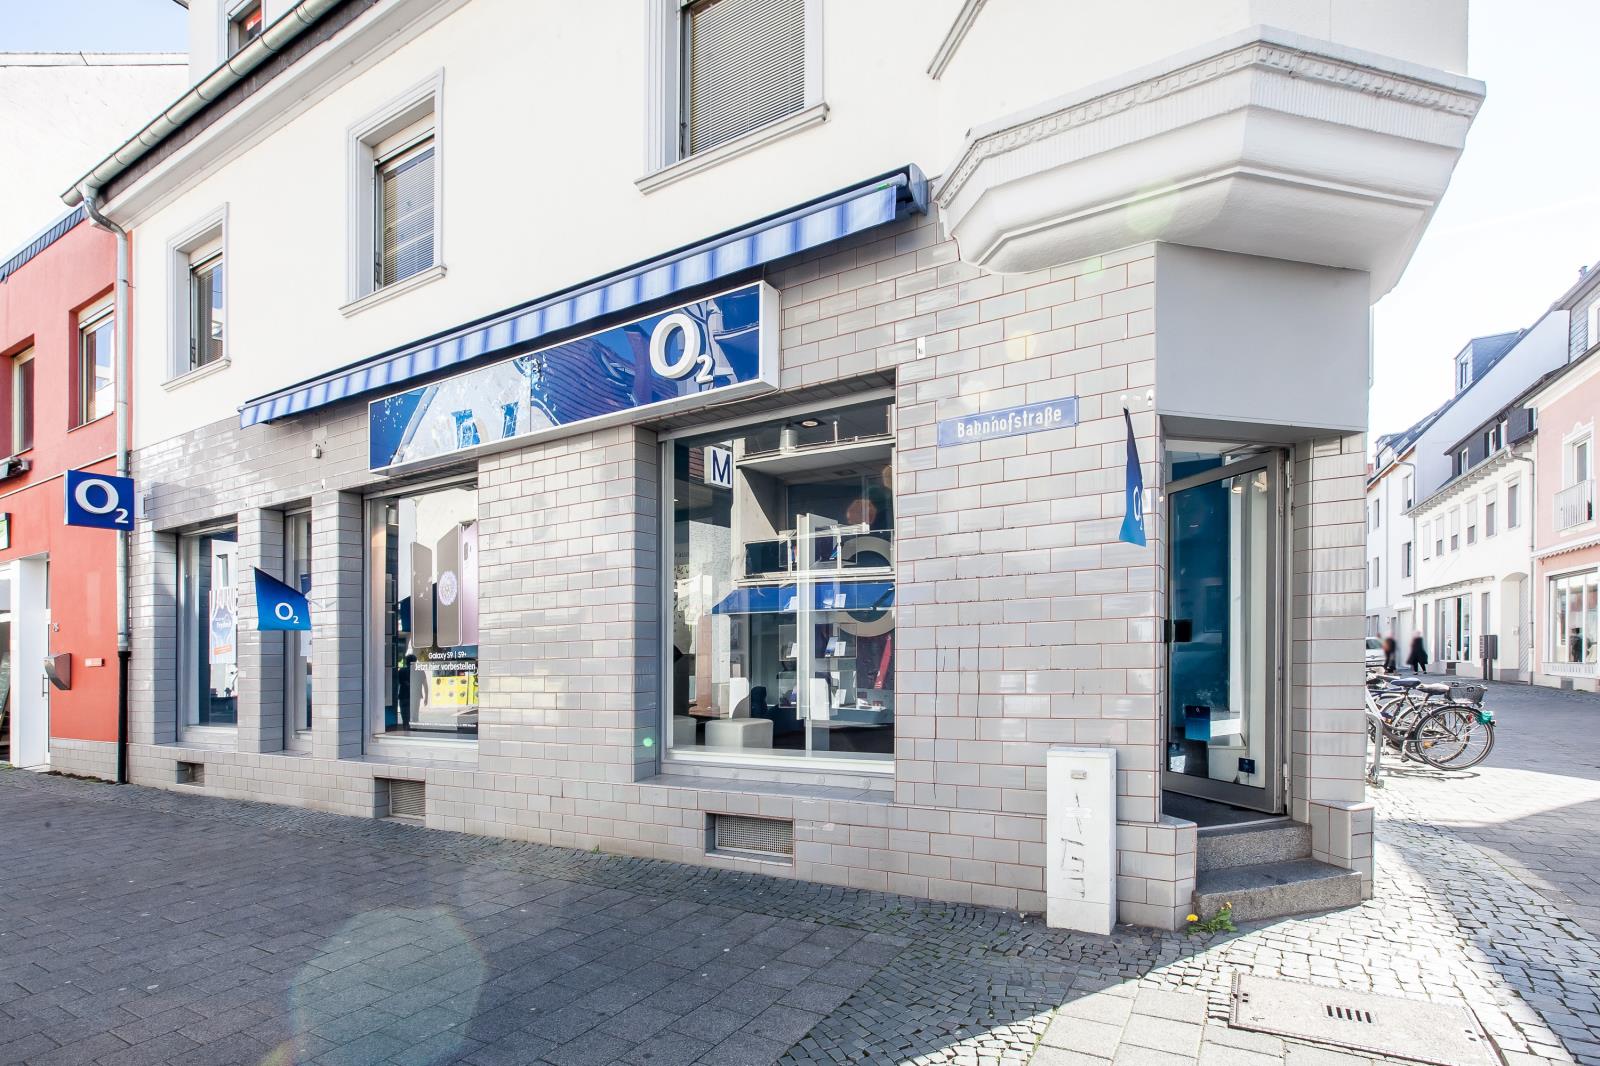 o2 Shop, Bahnhofstr. 28 in Rüsselsheim